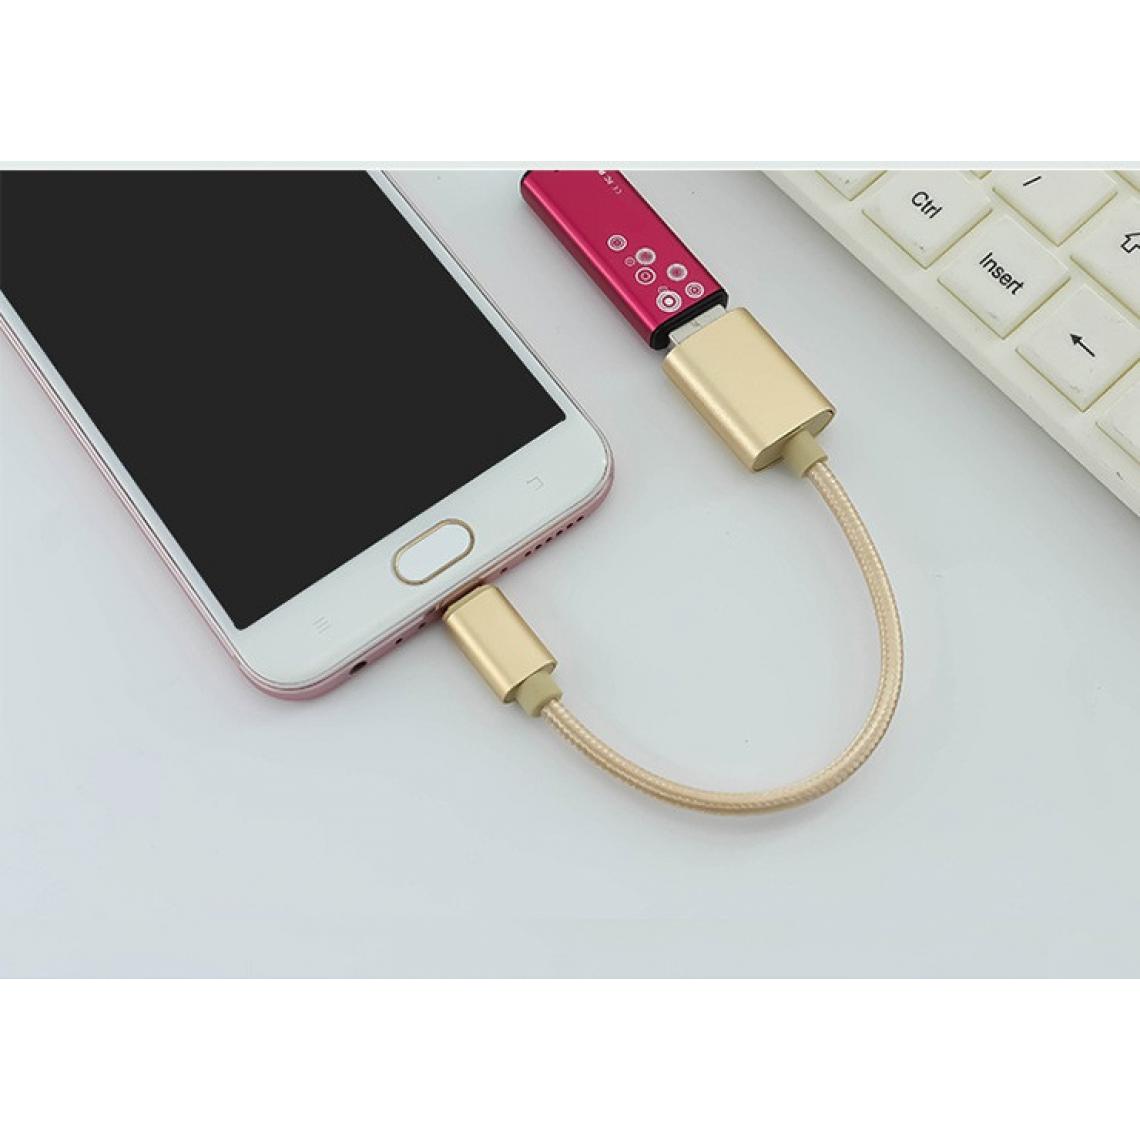 Shot - Adaptateur Type C/USB pour SONY Xperia XZ2 Compact Smartphone & MAC USB-C Clef (OR) - Autres accessoires smartphone